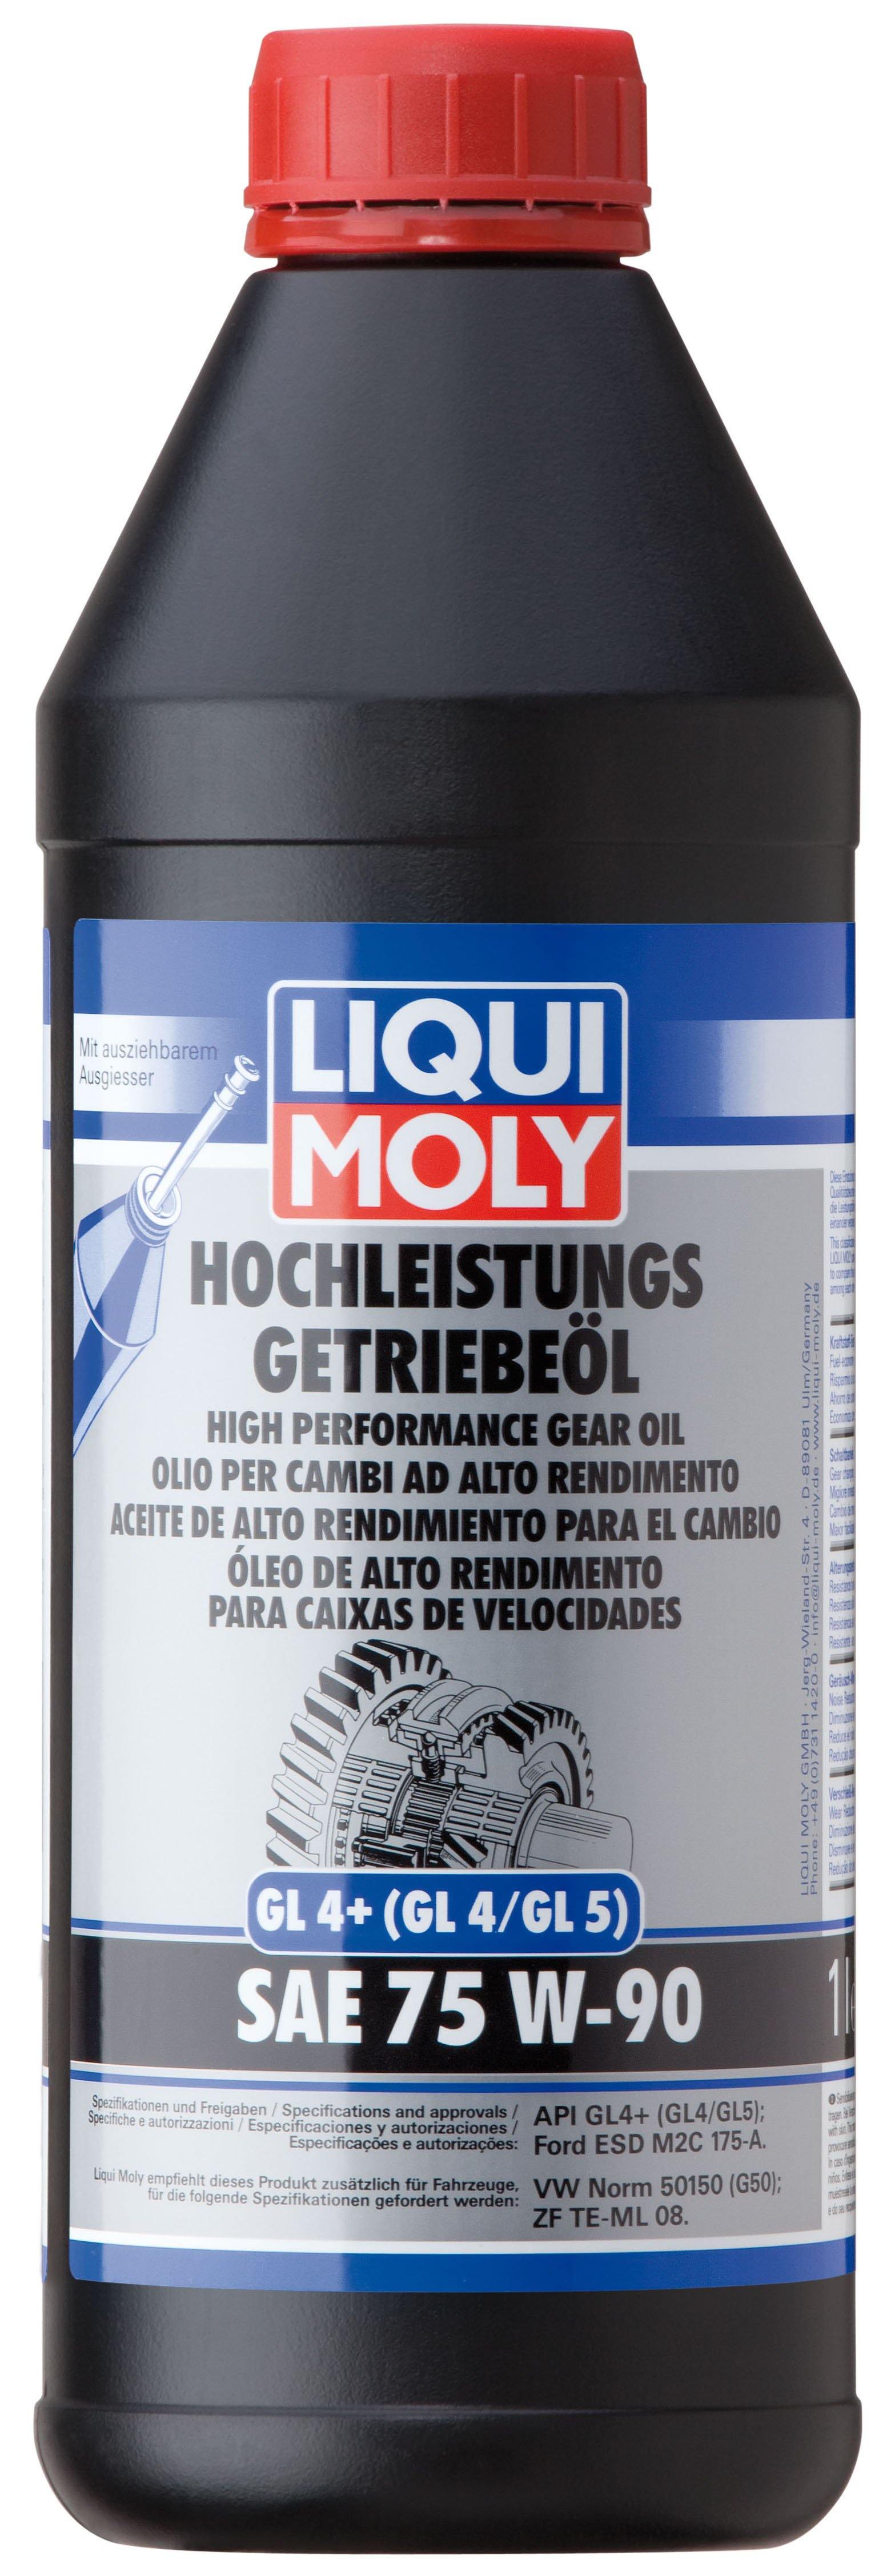 Liqui Moly High Performance Gear Oil (GL4+) SAE 75W-90 1L – LIQUI MOLY  BRASIL